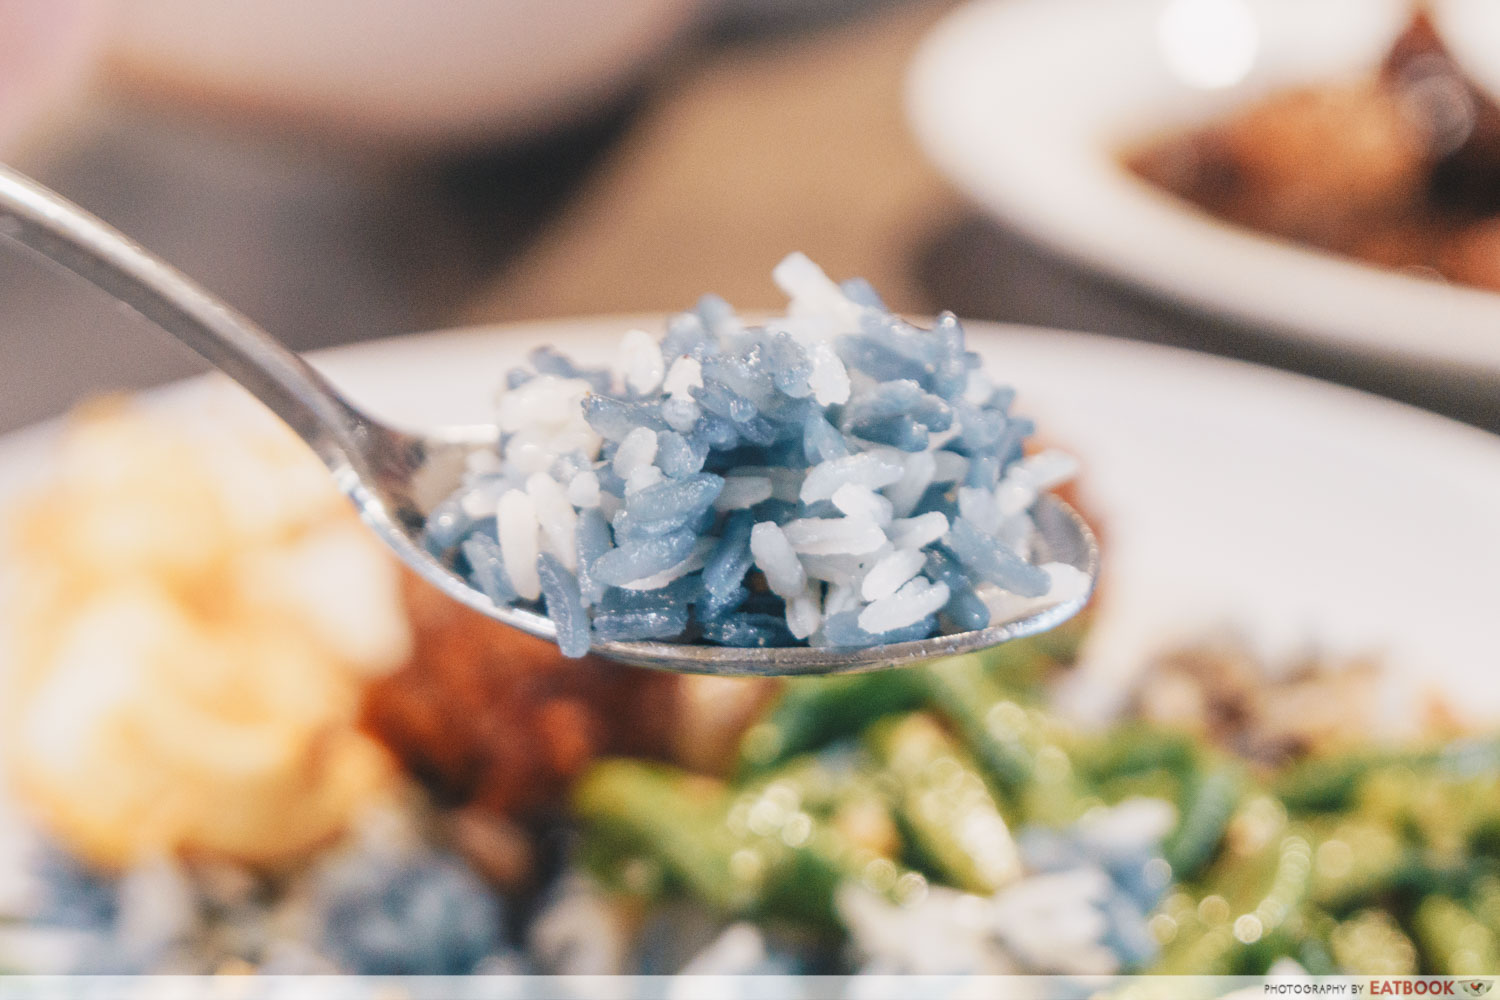 Emmanuel Peranakan Cuisine - Spoonful of blue pea flower rice